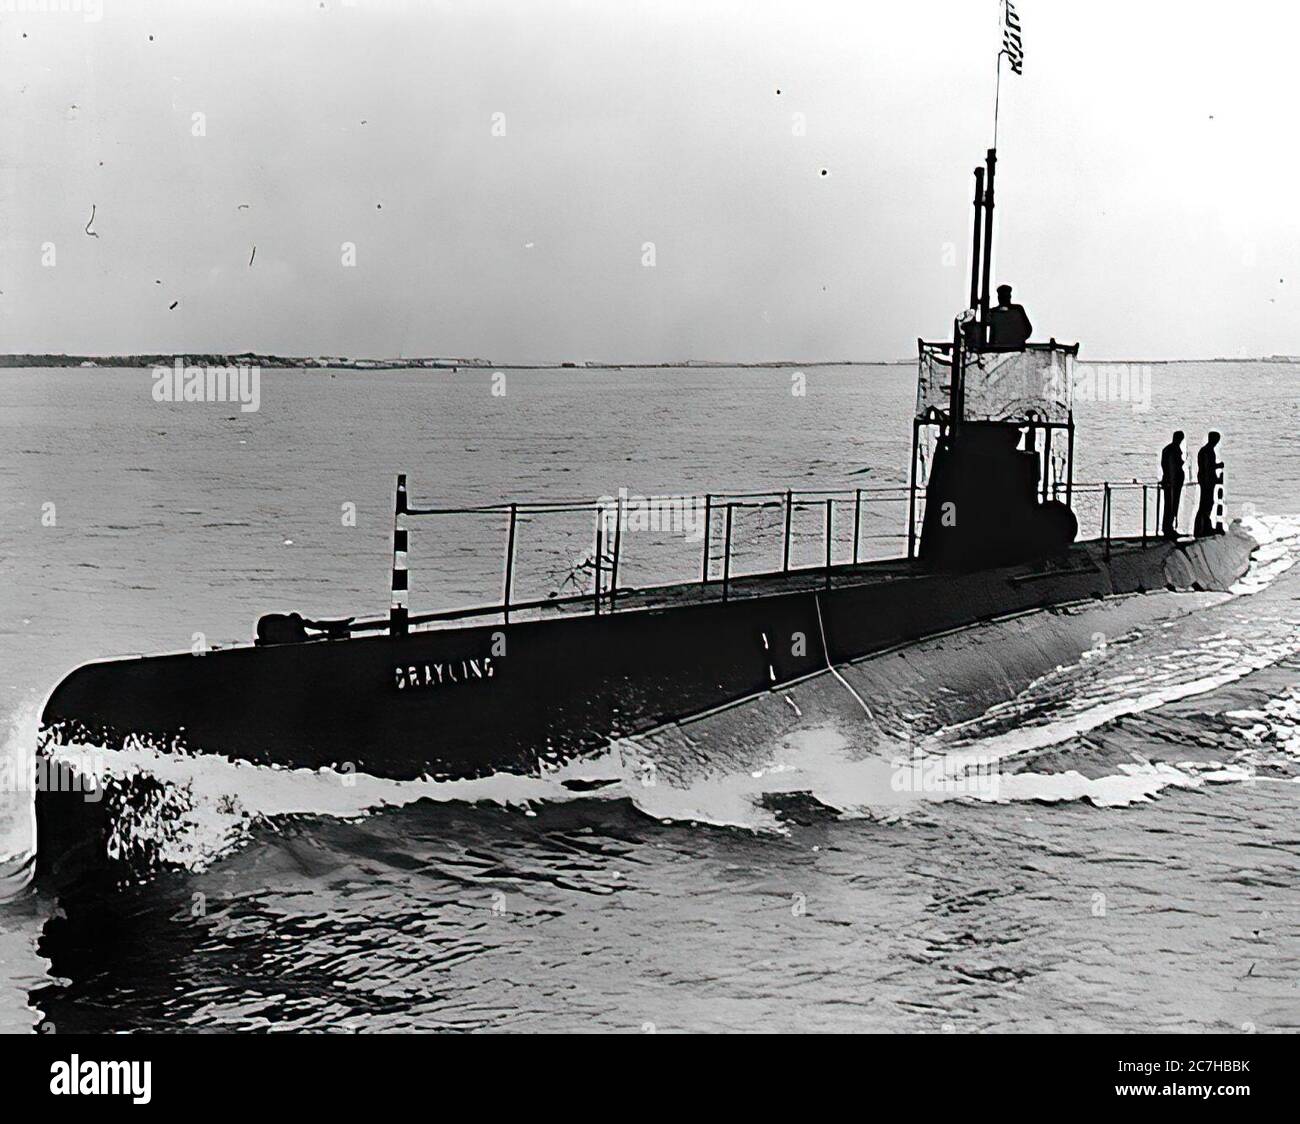 Famous Nazi German little submarine called   U -BOOTFile source: http://commons.wikimedia.org/wiki/File:USS Grayling;0801804.jpg Stock Photo